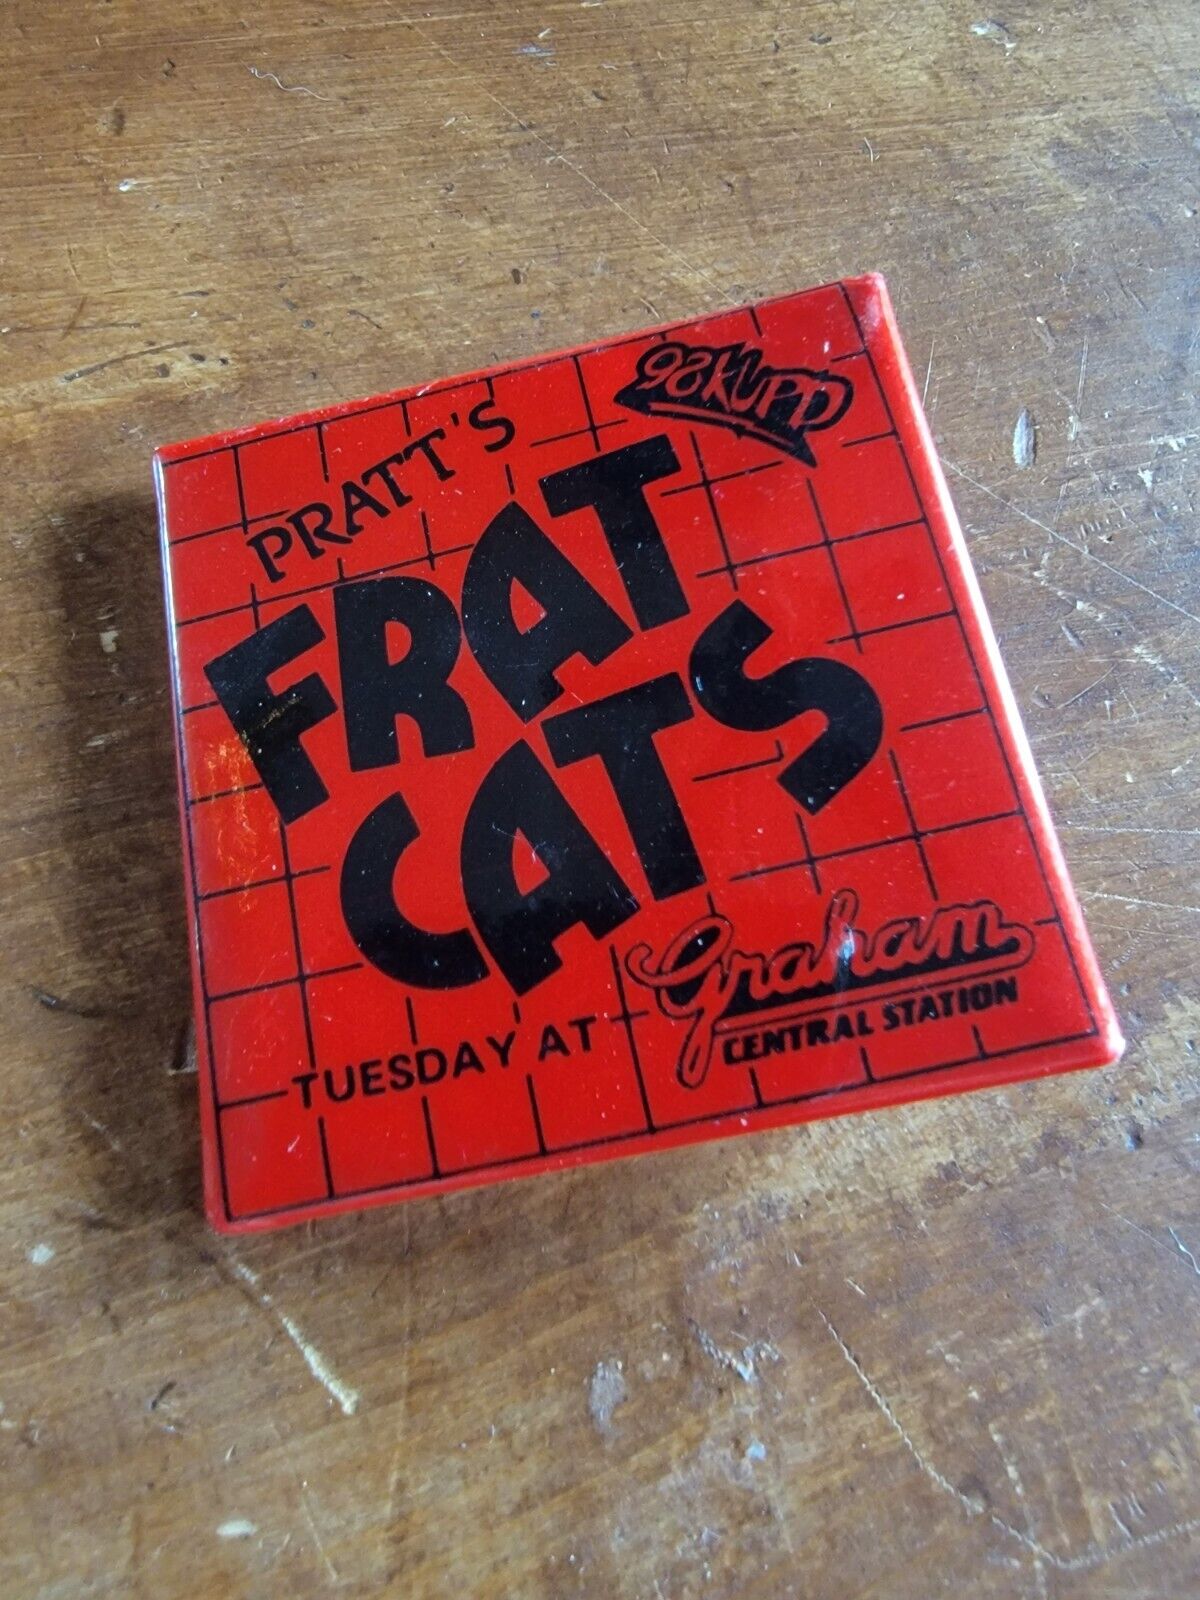 Pratt\'s Frat Cats 98KUPD Graham Central Station 1990\'s Promo Pinback